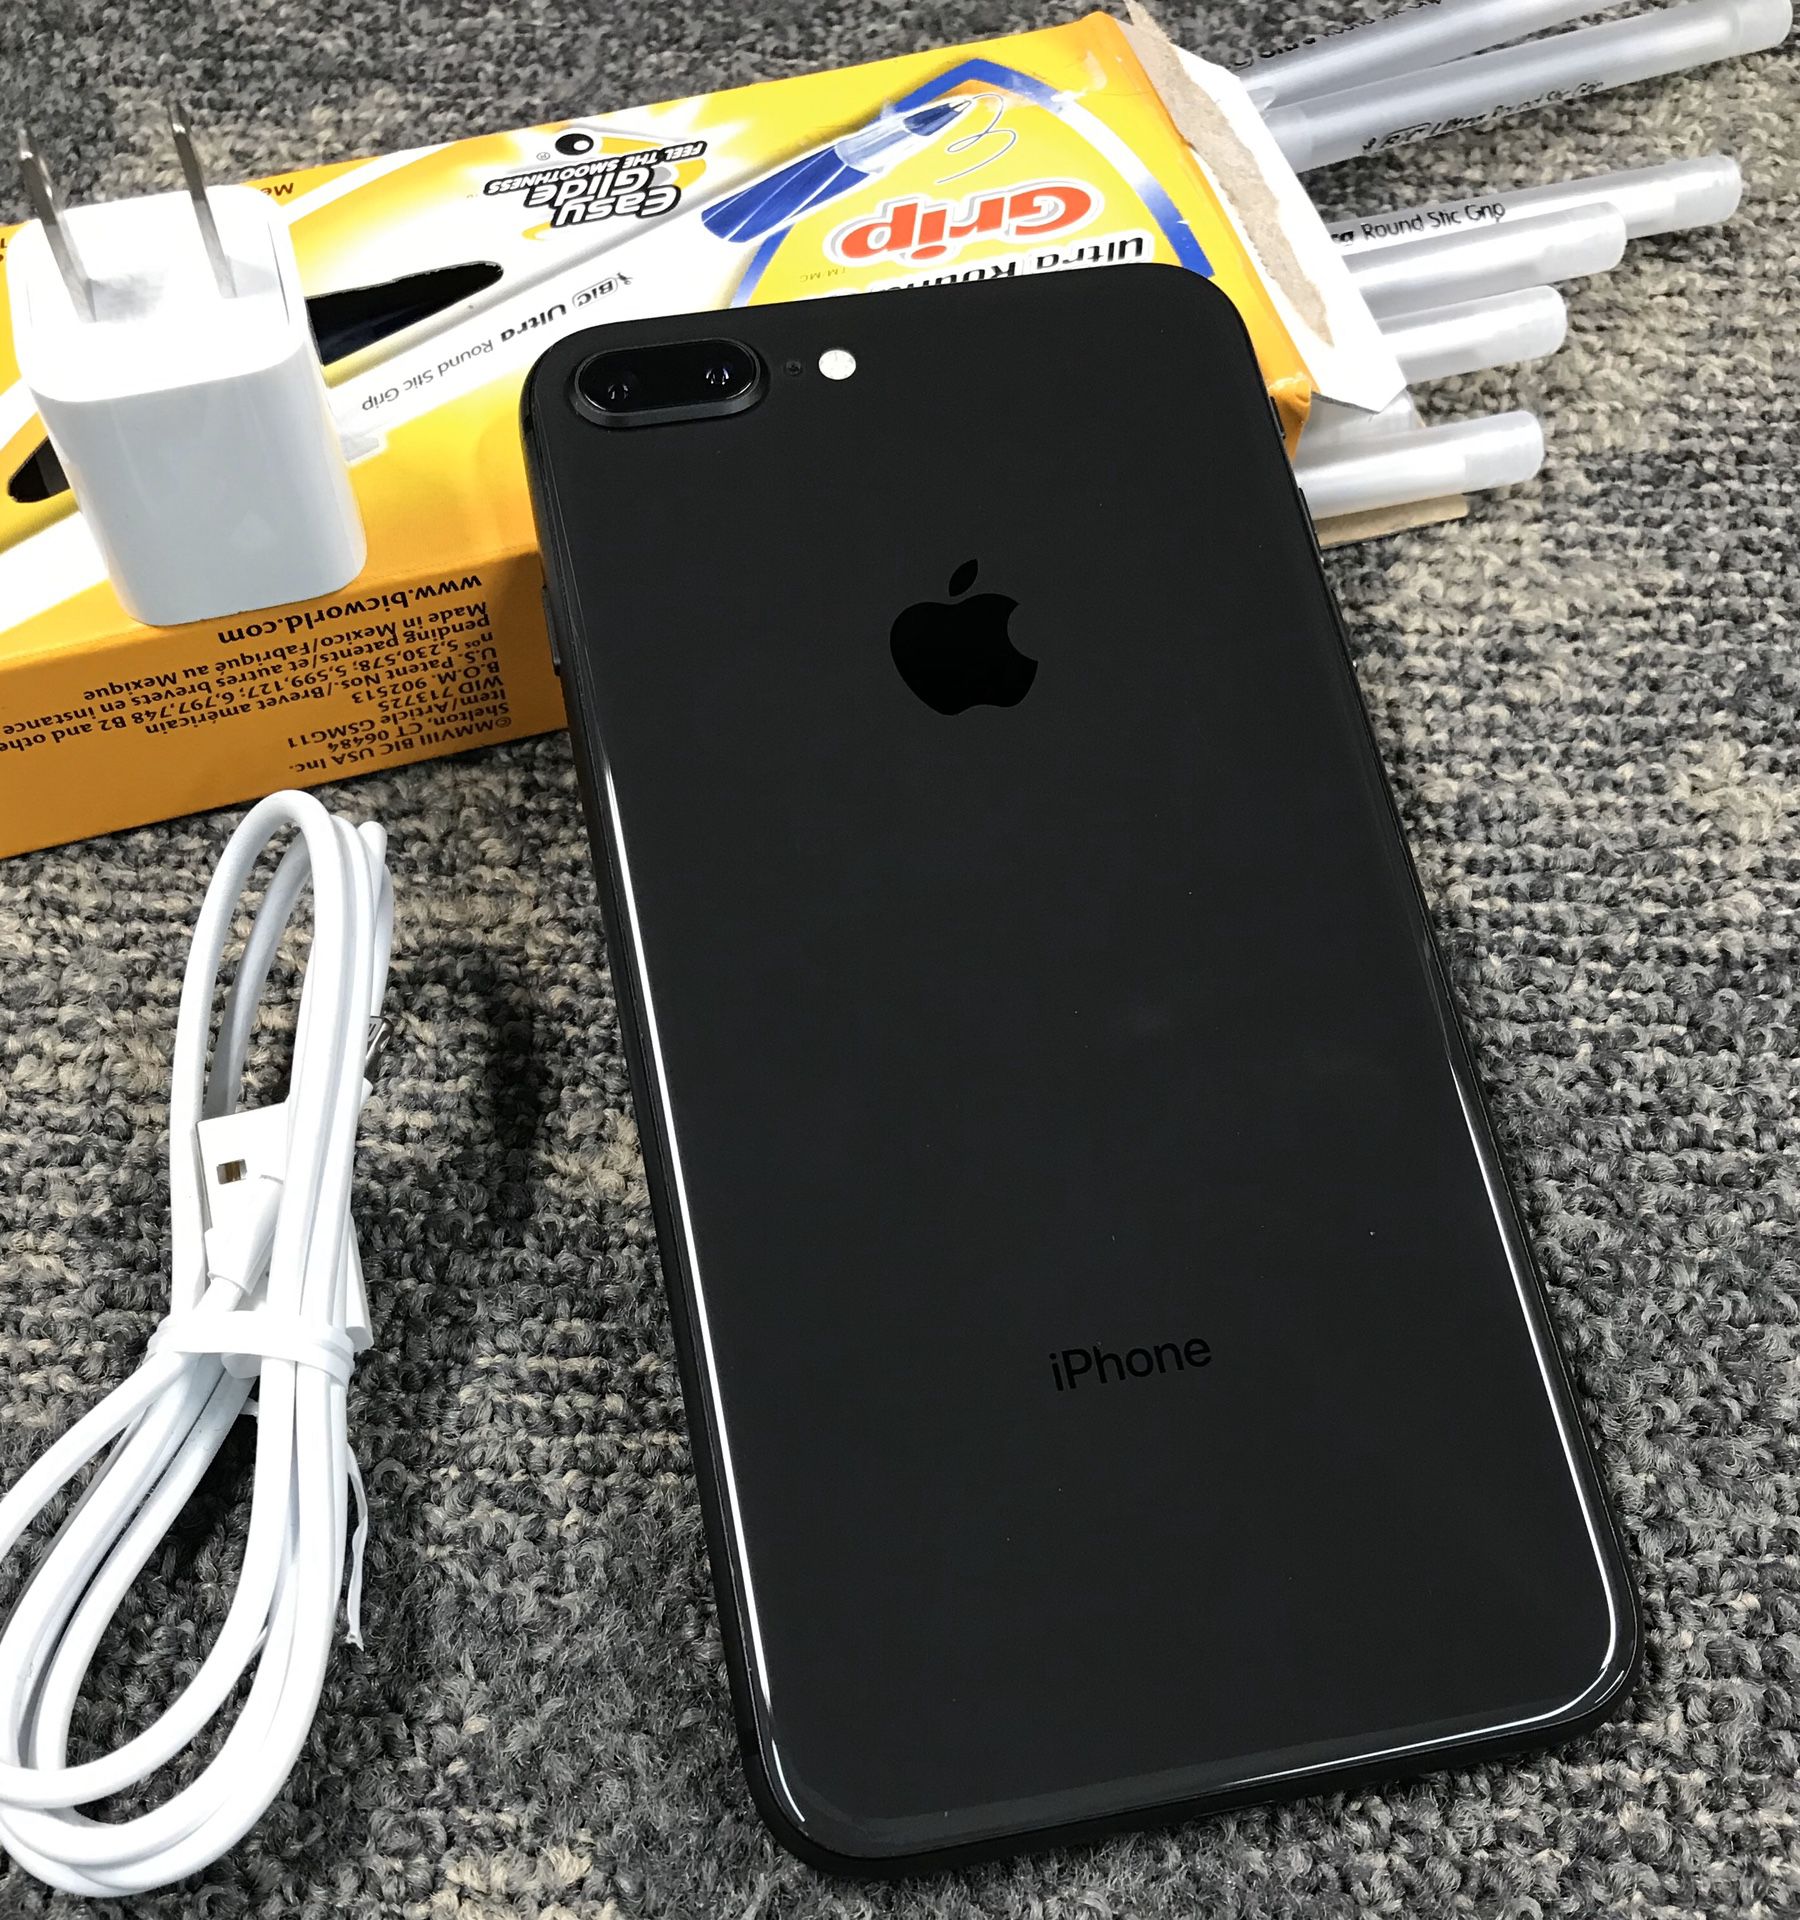 256Gb Black iPhone 8 Plus(8+) - Factory Unlocked.